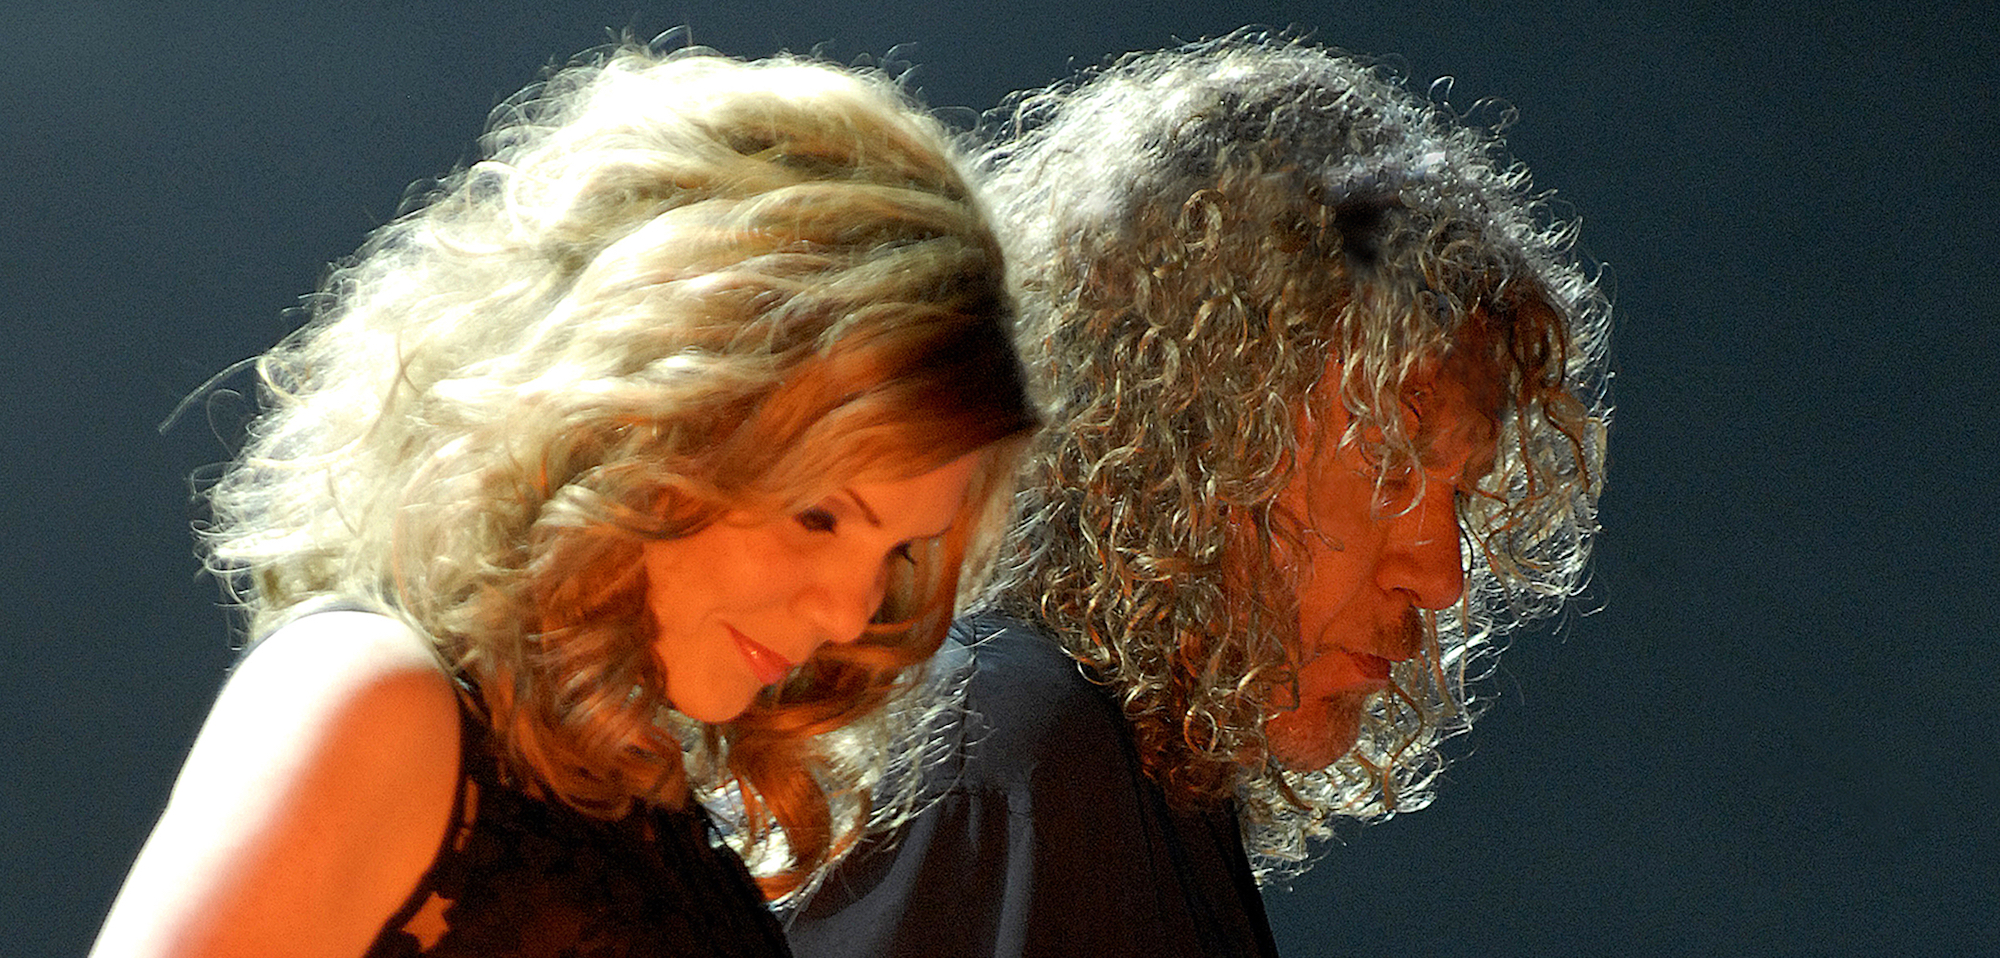 Robert Plant, Allison Krauss Reunite for New Album ‘Raise the Roof’